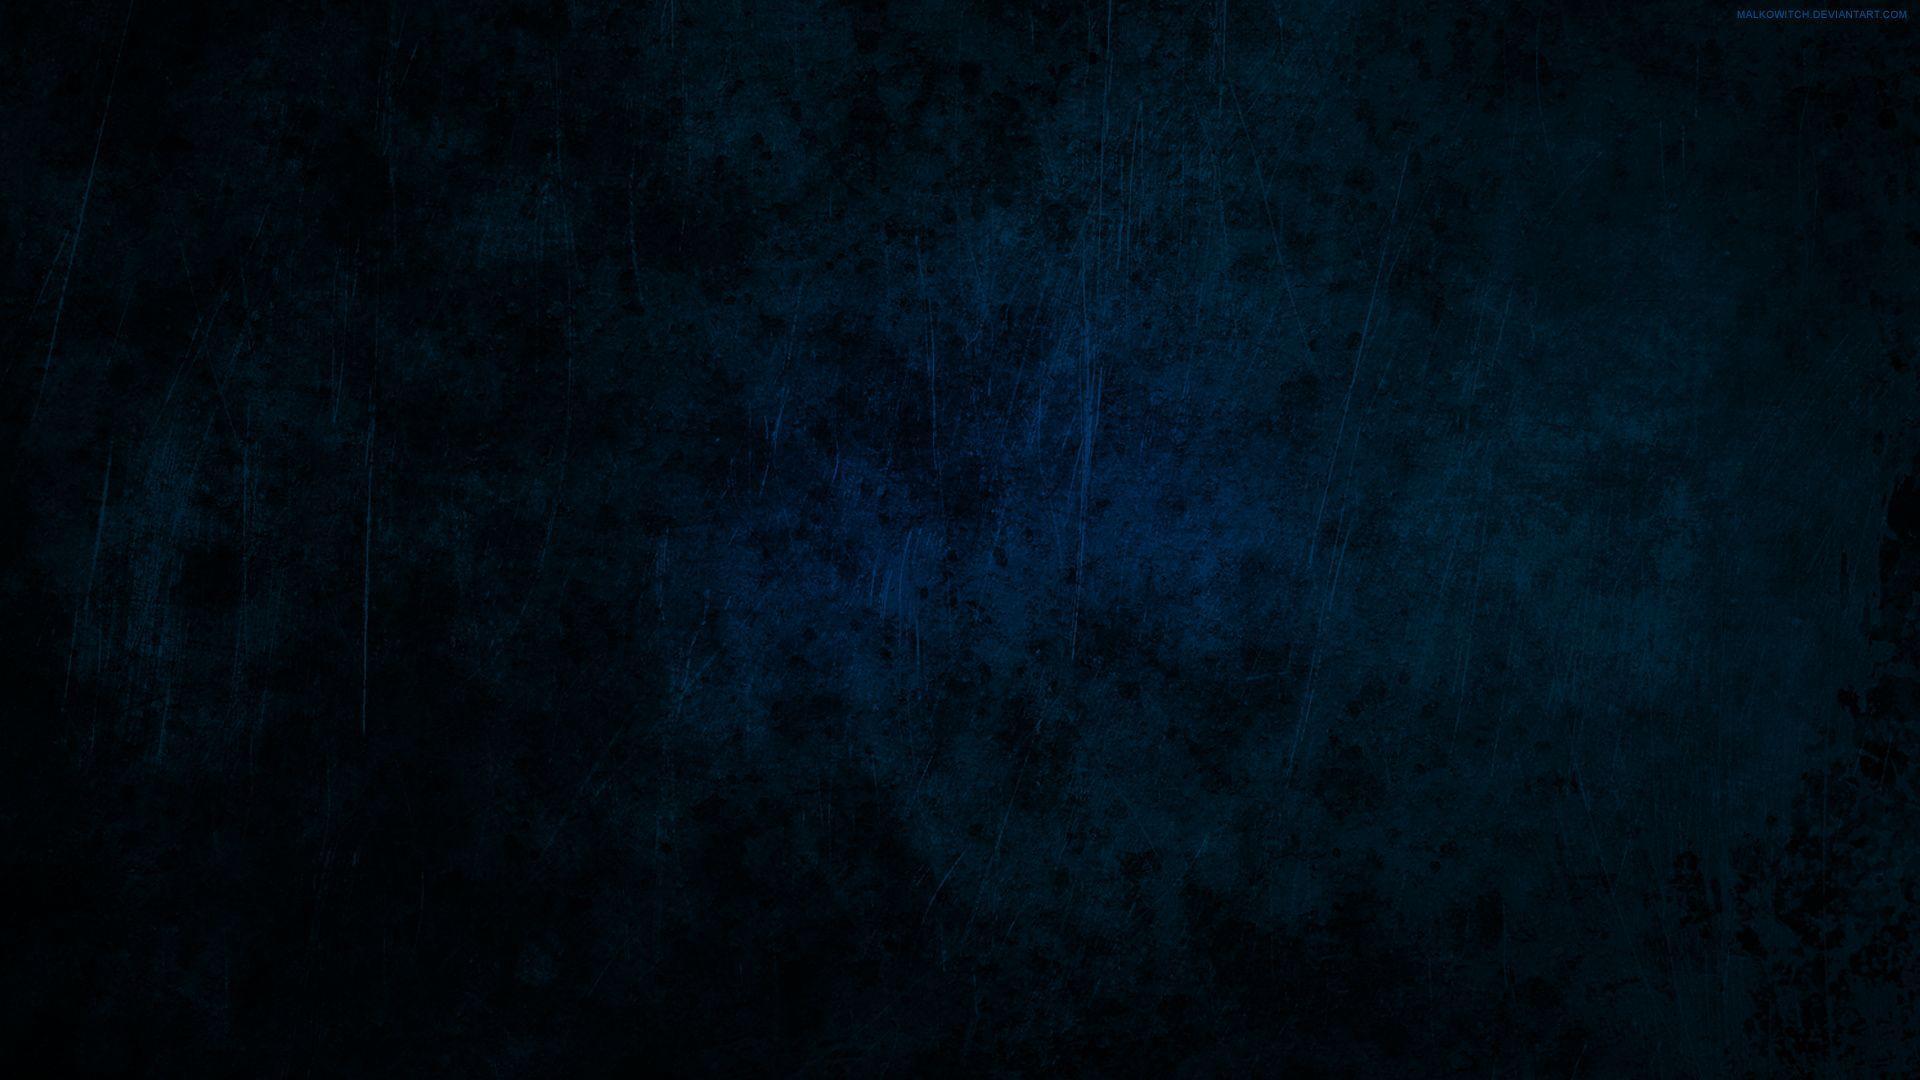 Neon Blue Minimalist Page Artwork Screens Wallpaper 1920x1080PX